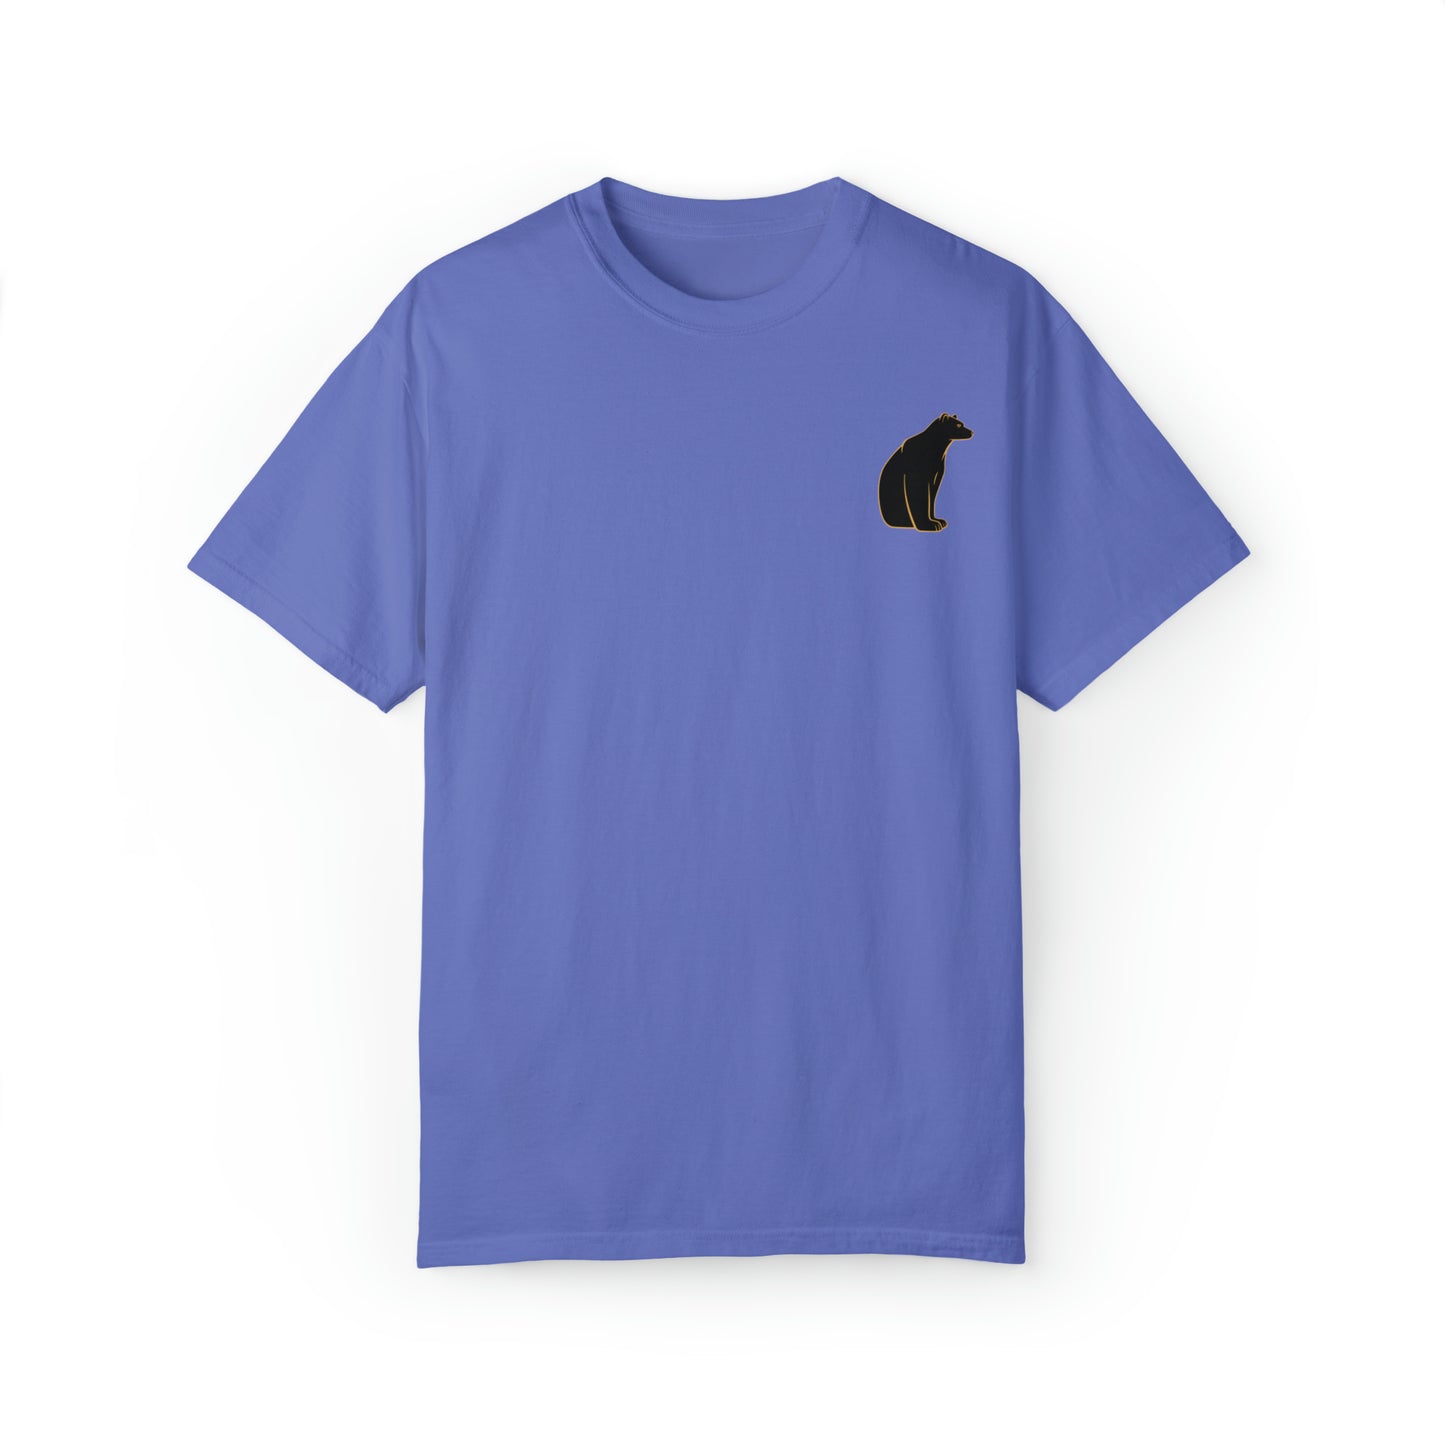 Bare Necessities Comfort Colors Unisex Garment-Dyed T-shirt